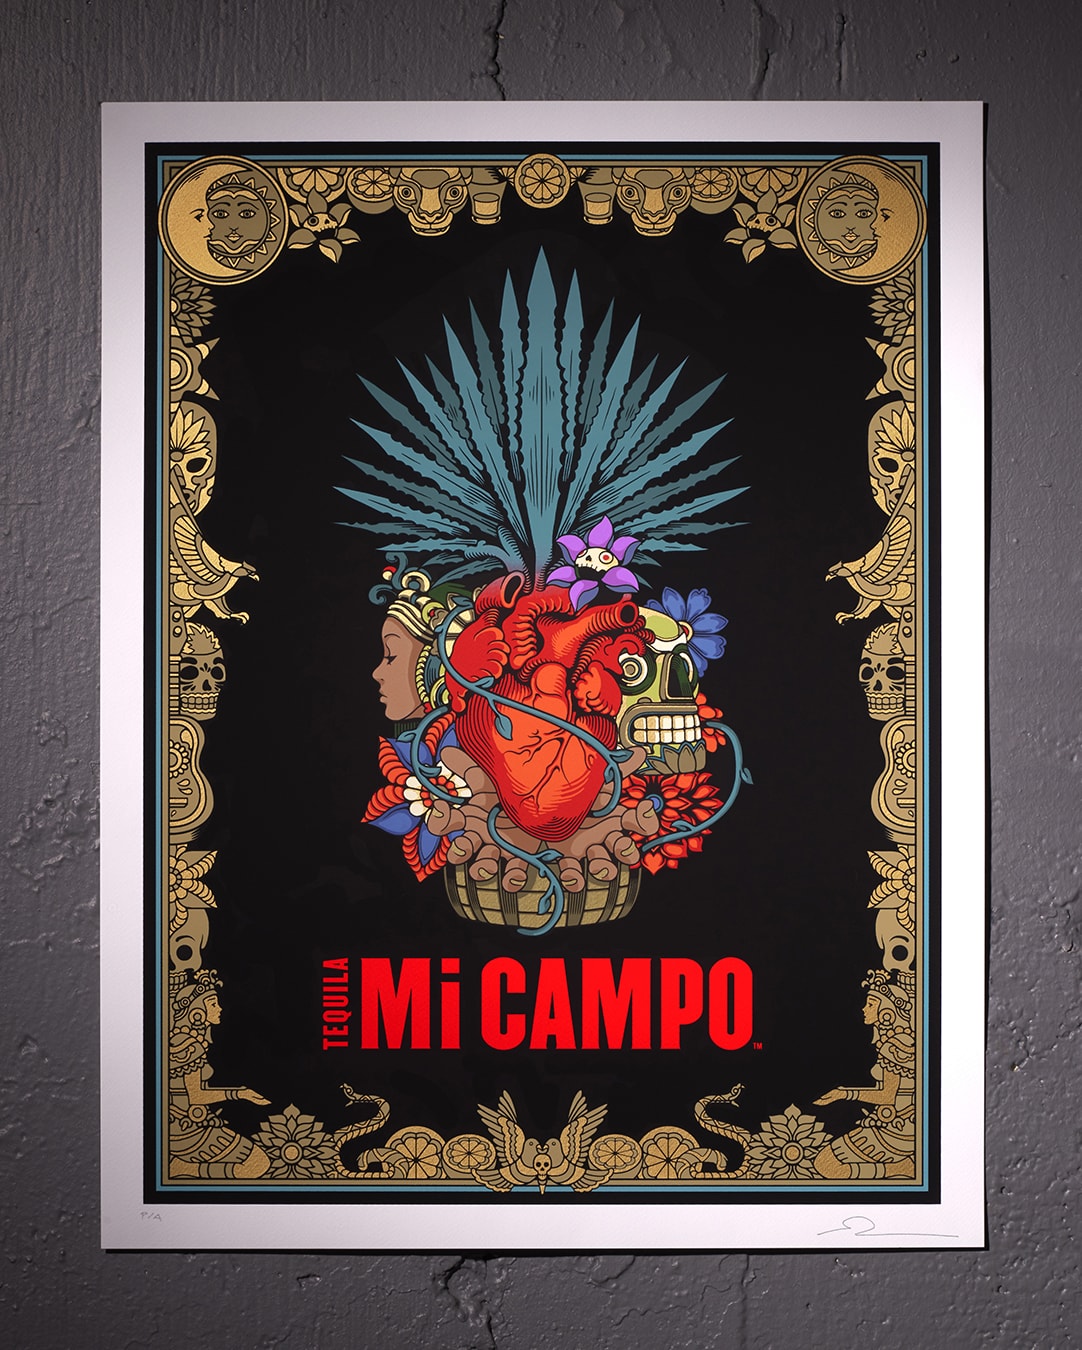 Mi Campo - screen printed brand launch poster